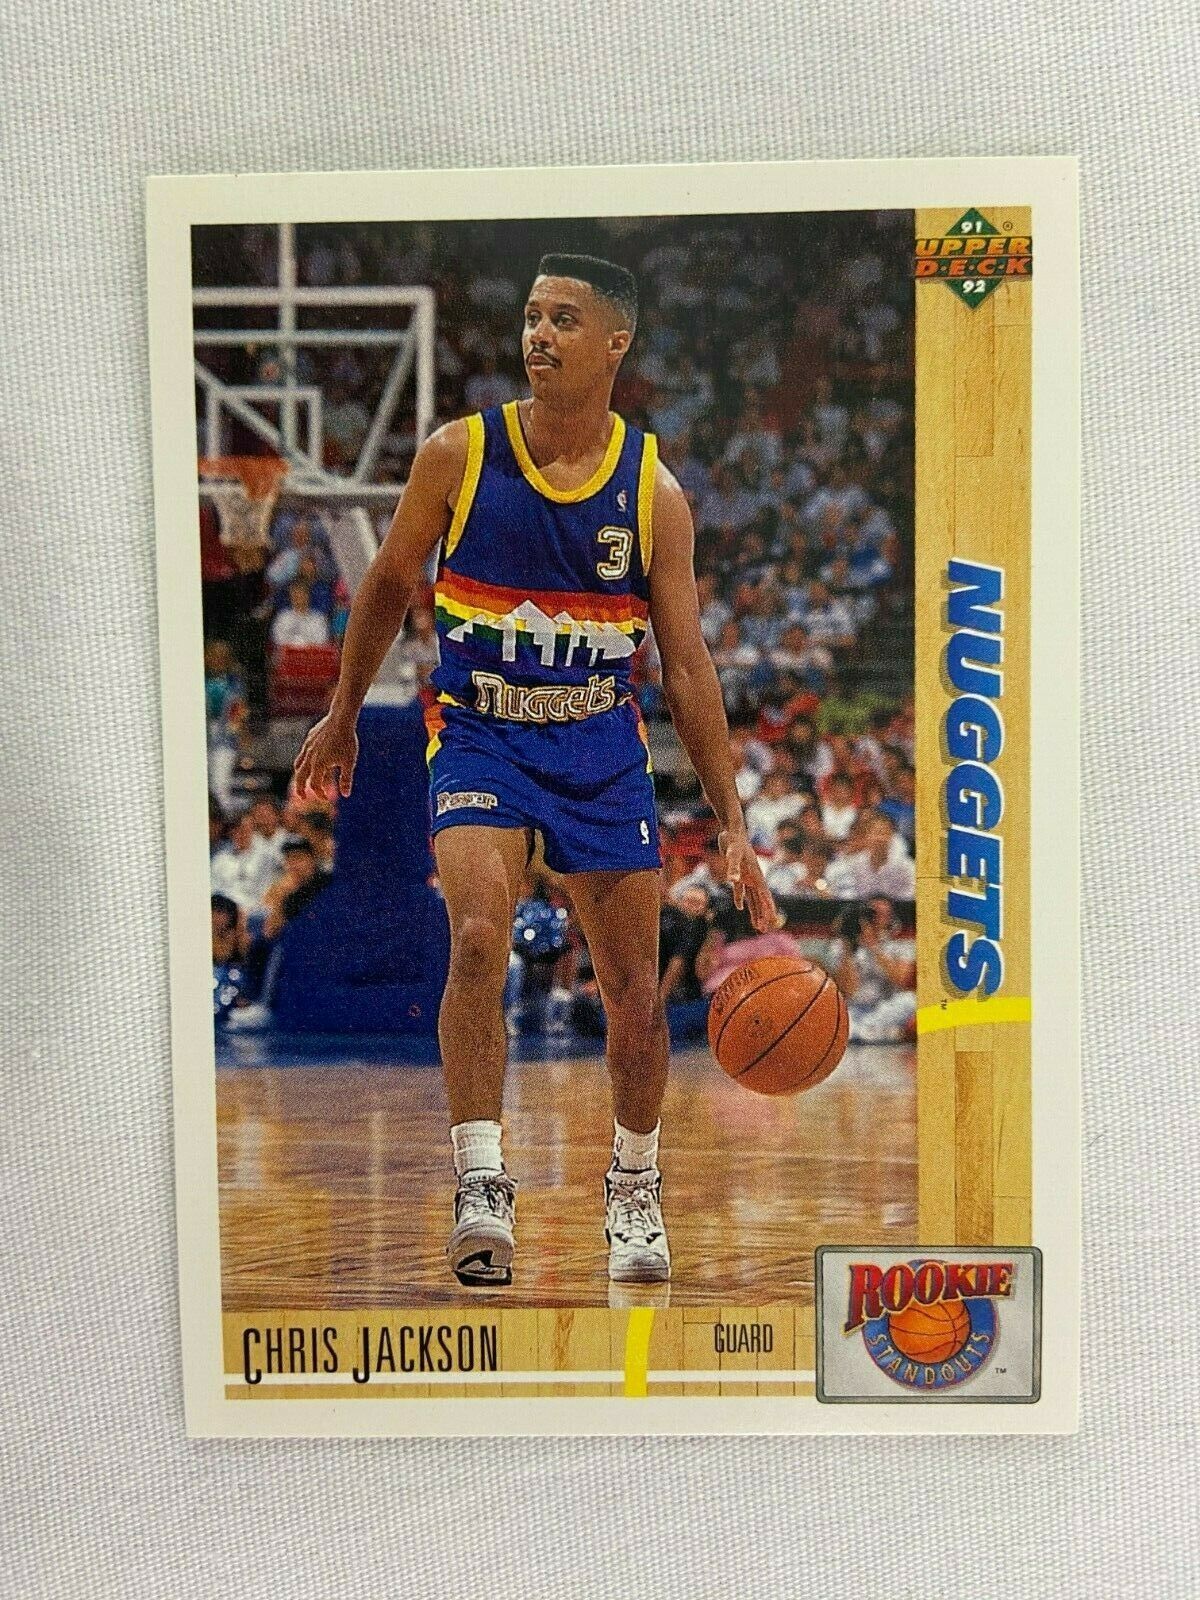 Chris Jackson Denver Nuggets 1991 Upper Deck Basketball Card R 17